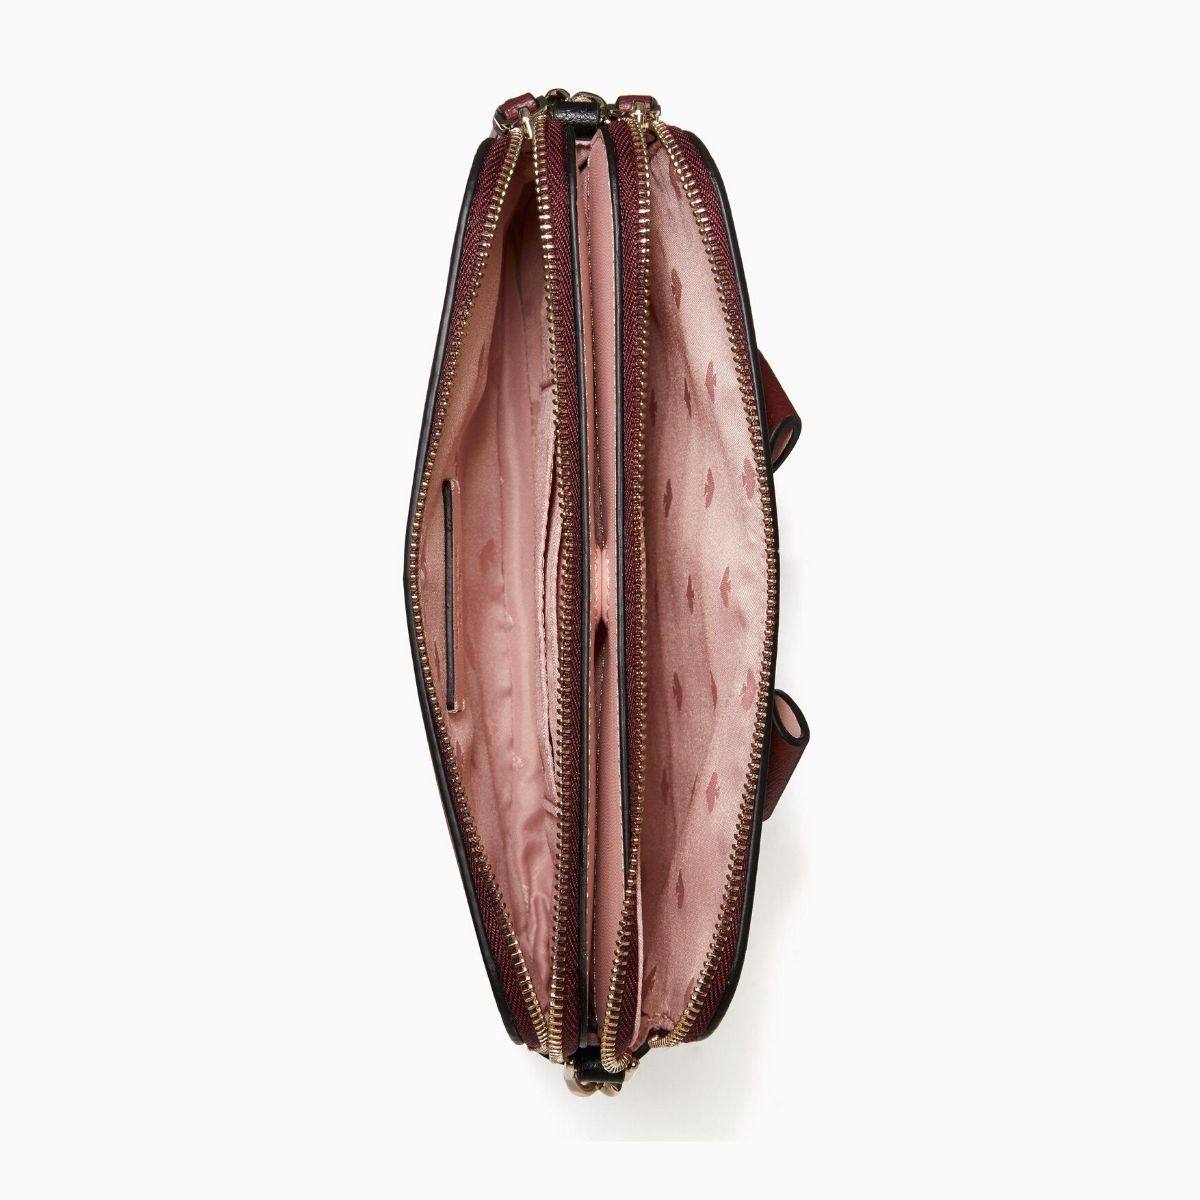 Leather Double Zip Cross Body Bag